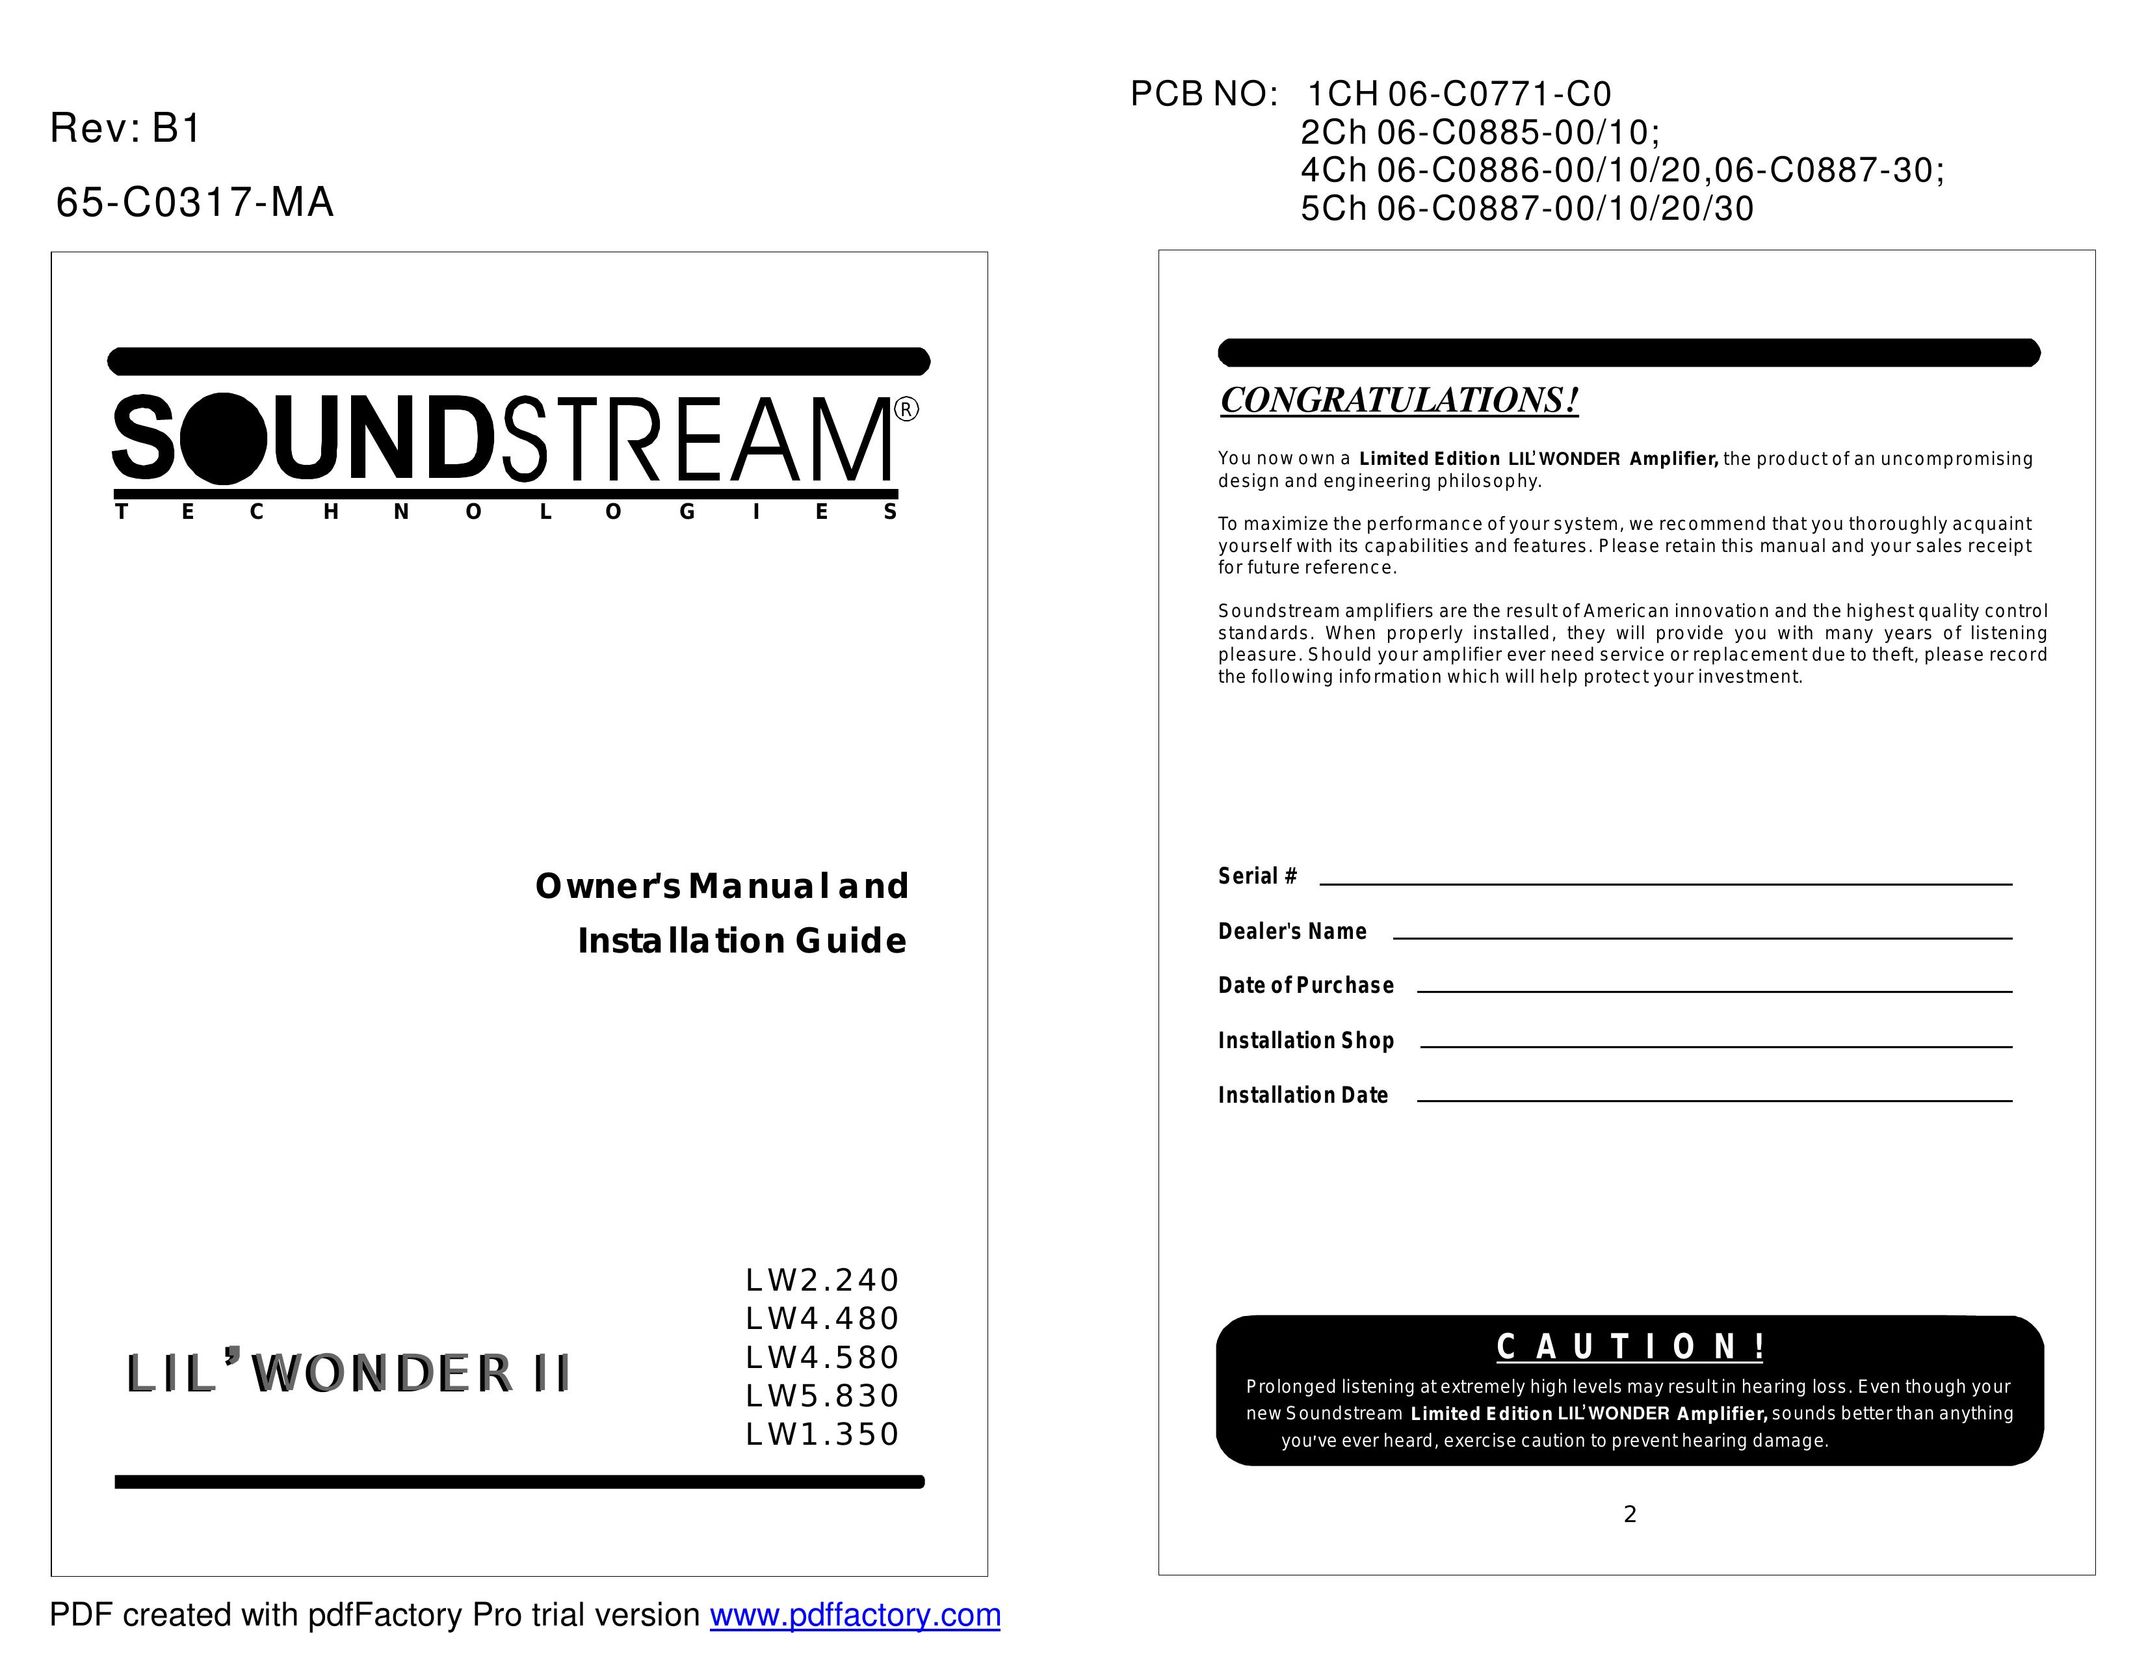 Soundstream Technologies LW4.480 Stereo Amplifier User Manual